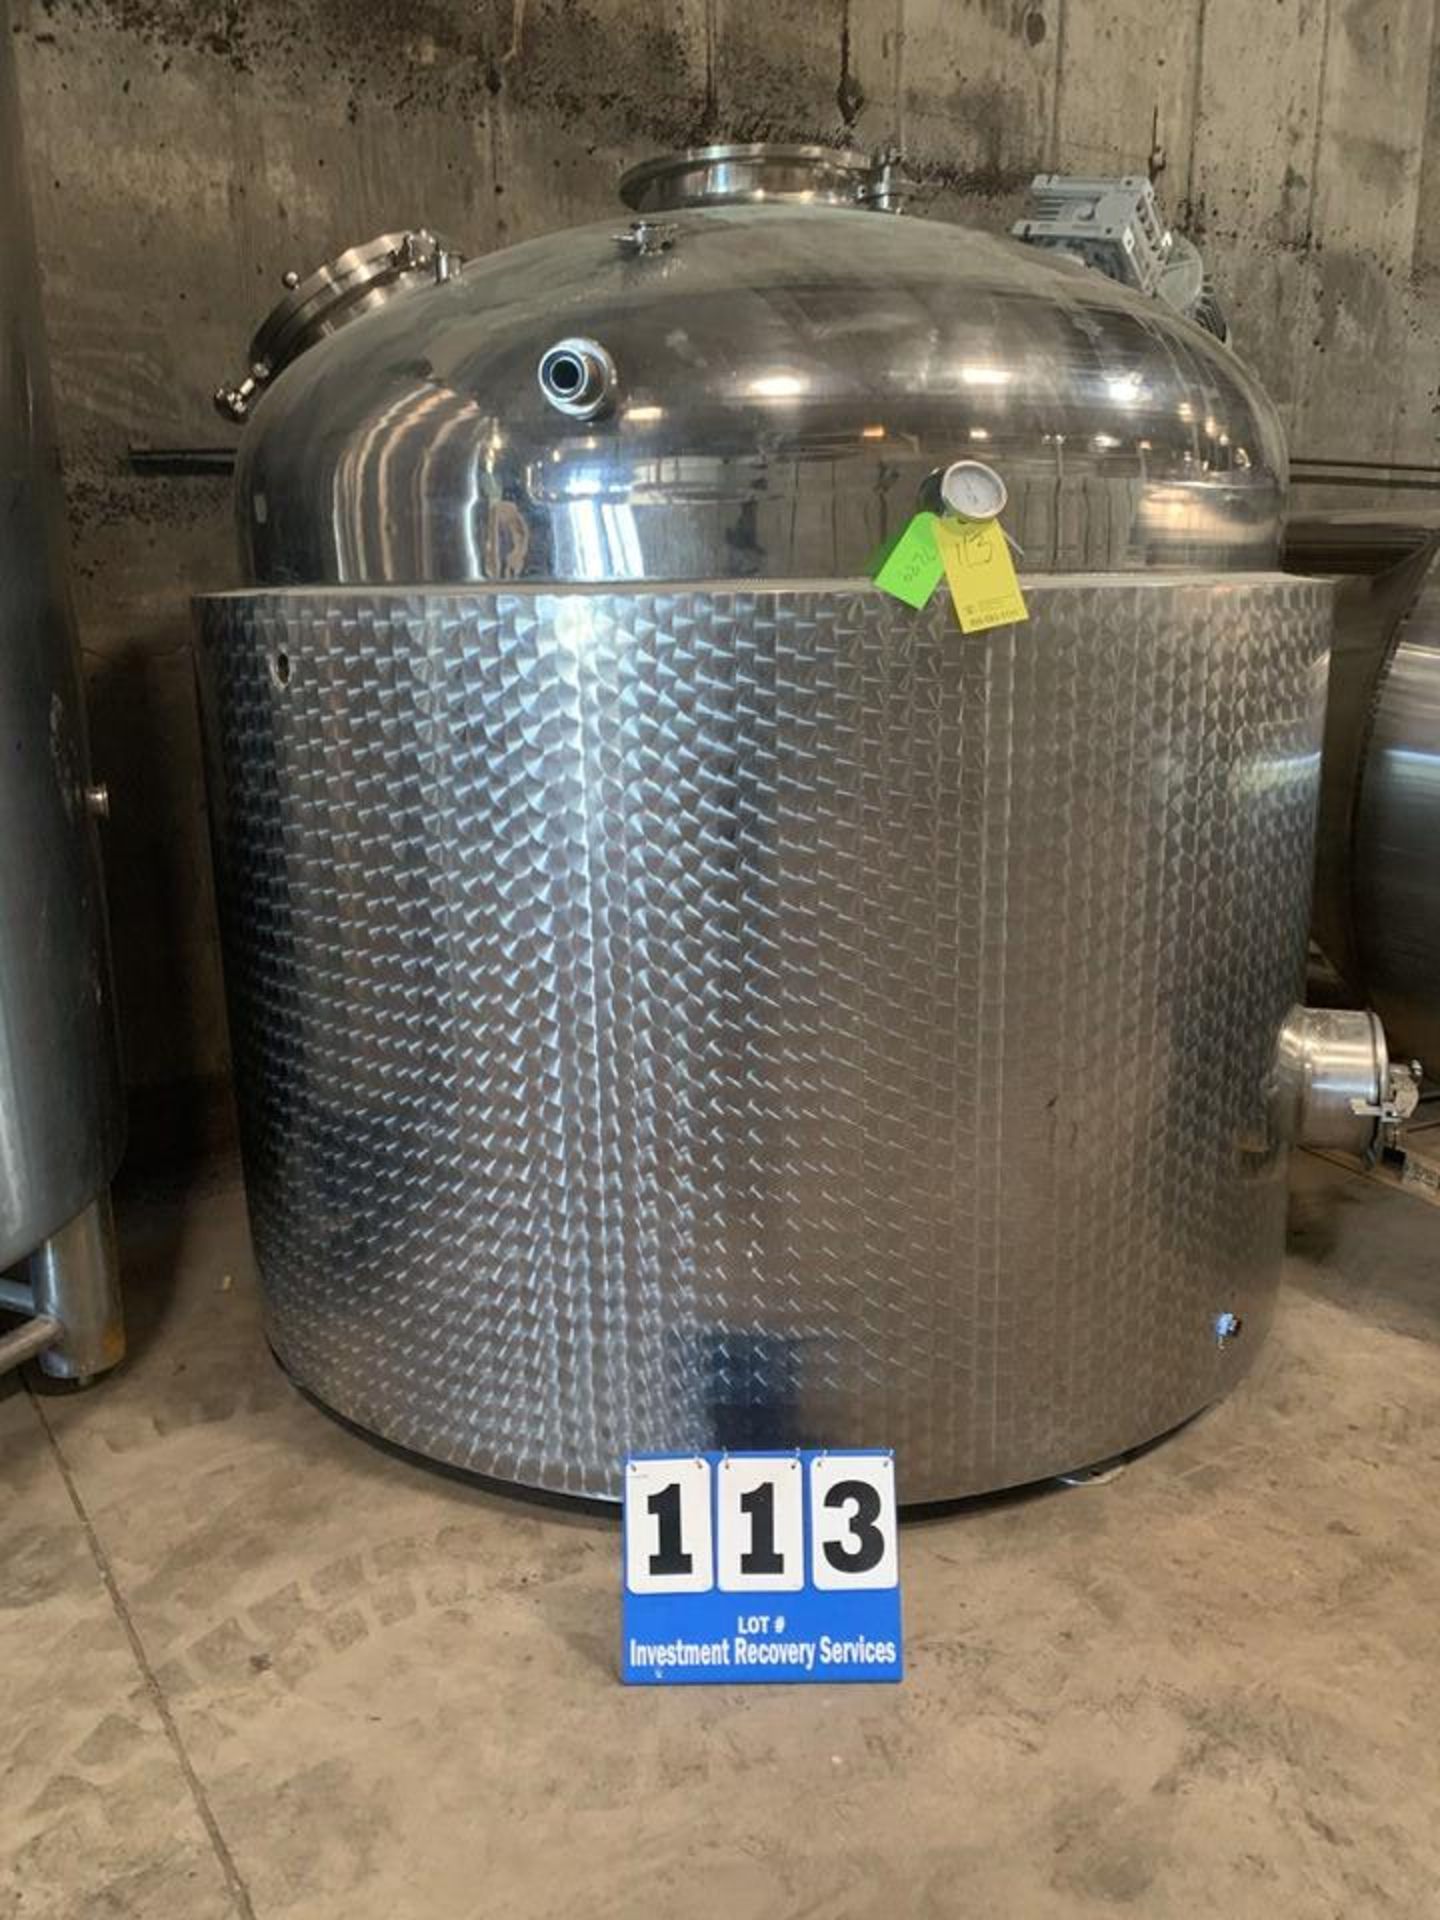 2016 DYE Still, 600 Gallon Pot (Located in TX) | Rig Fee $500